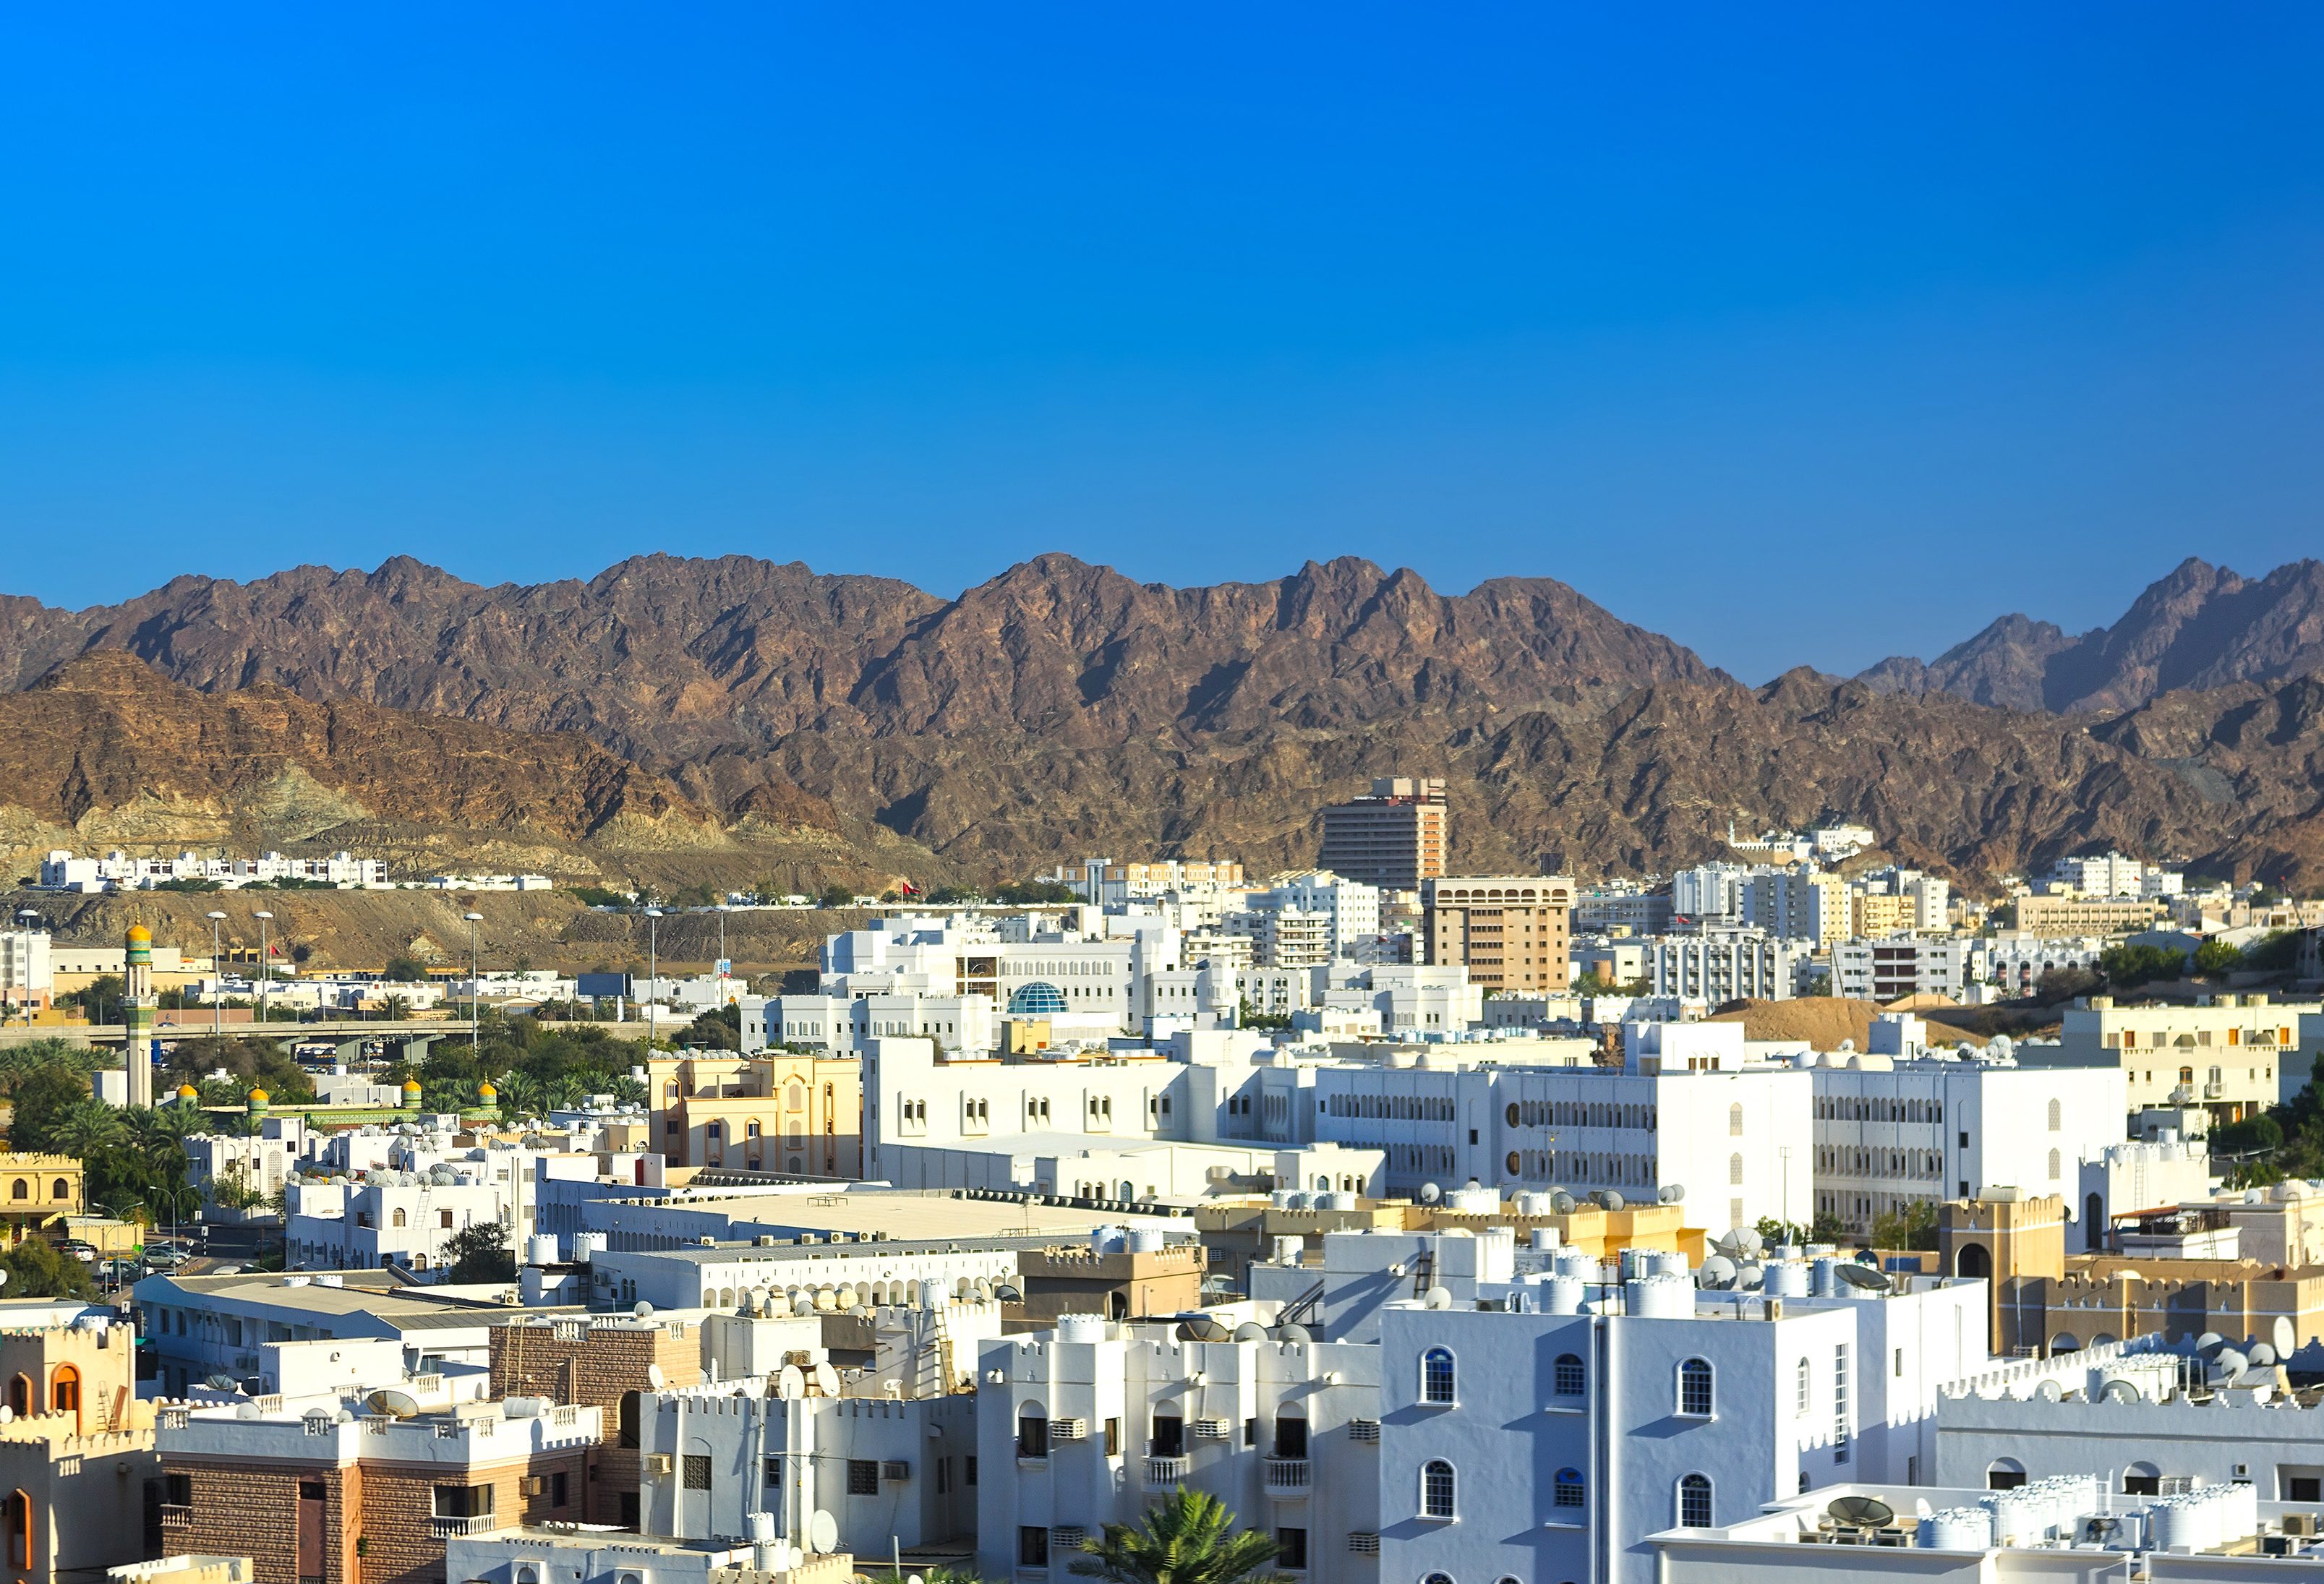 Goedkope stad en strand combinatie Oman I 7 dagen foto